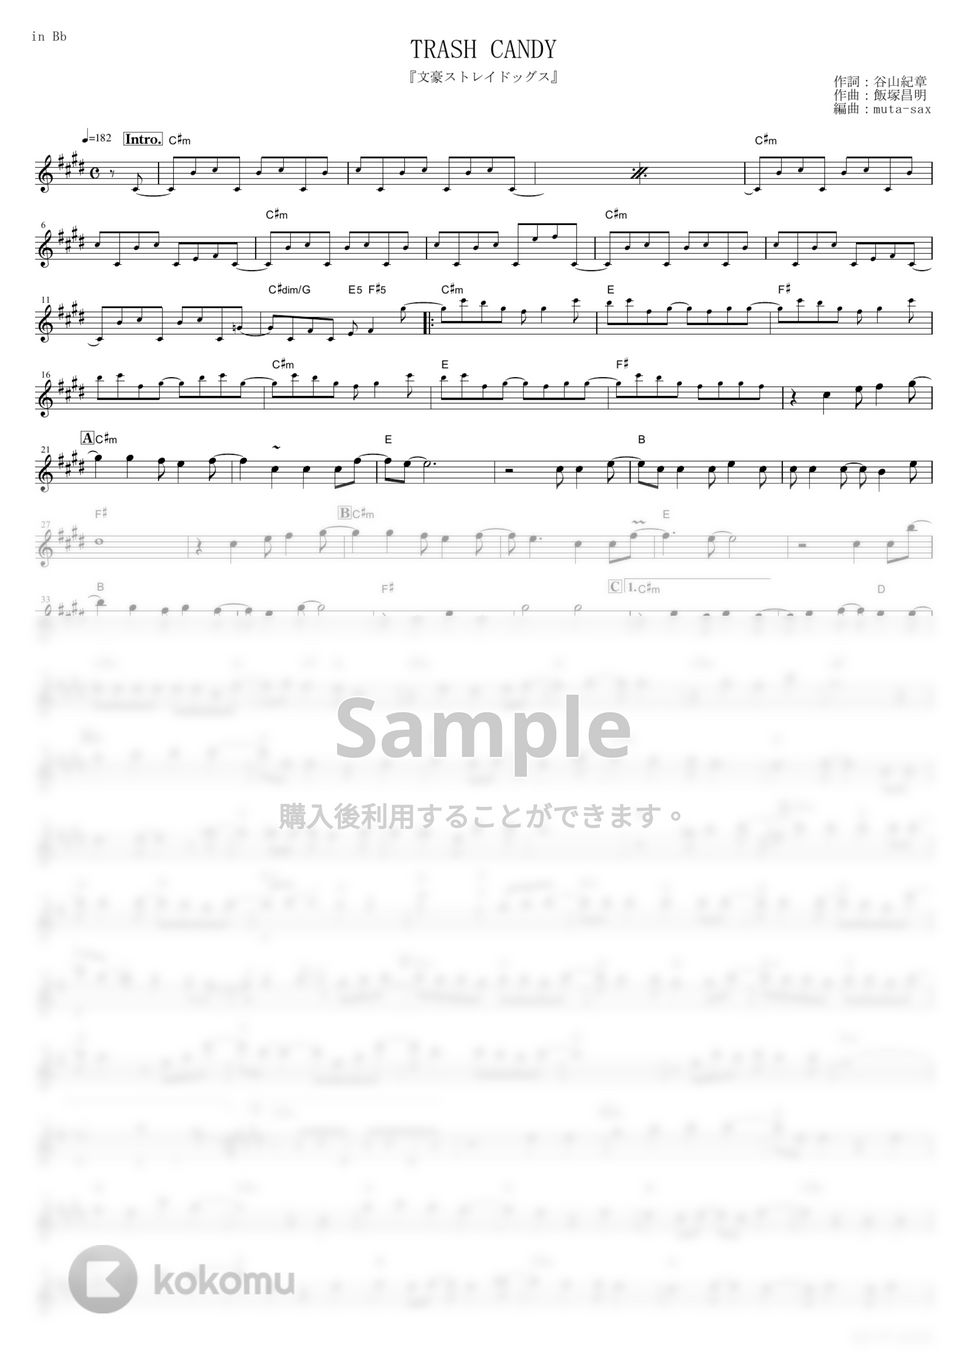 GRANRODEO - TRASH CANDY (『文豪ストレイドッグス』 / in Bb) by muta-sax